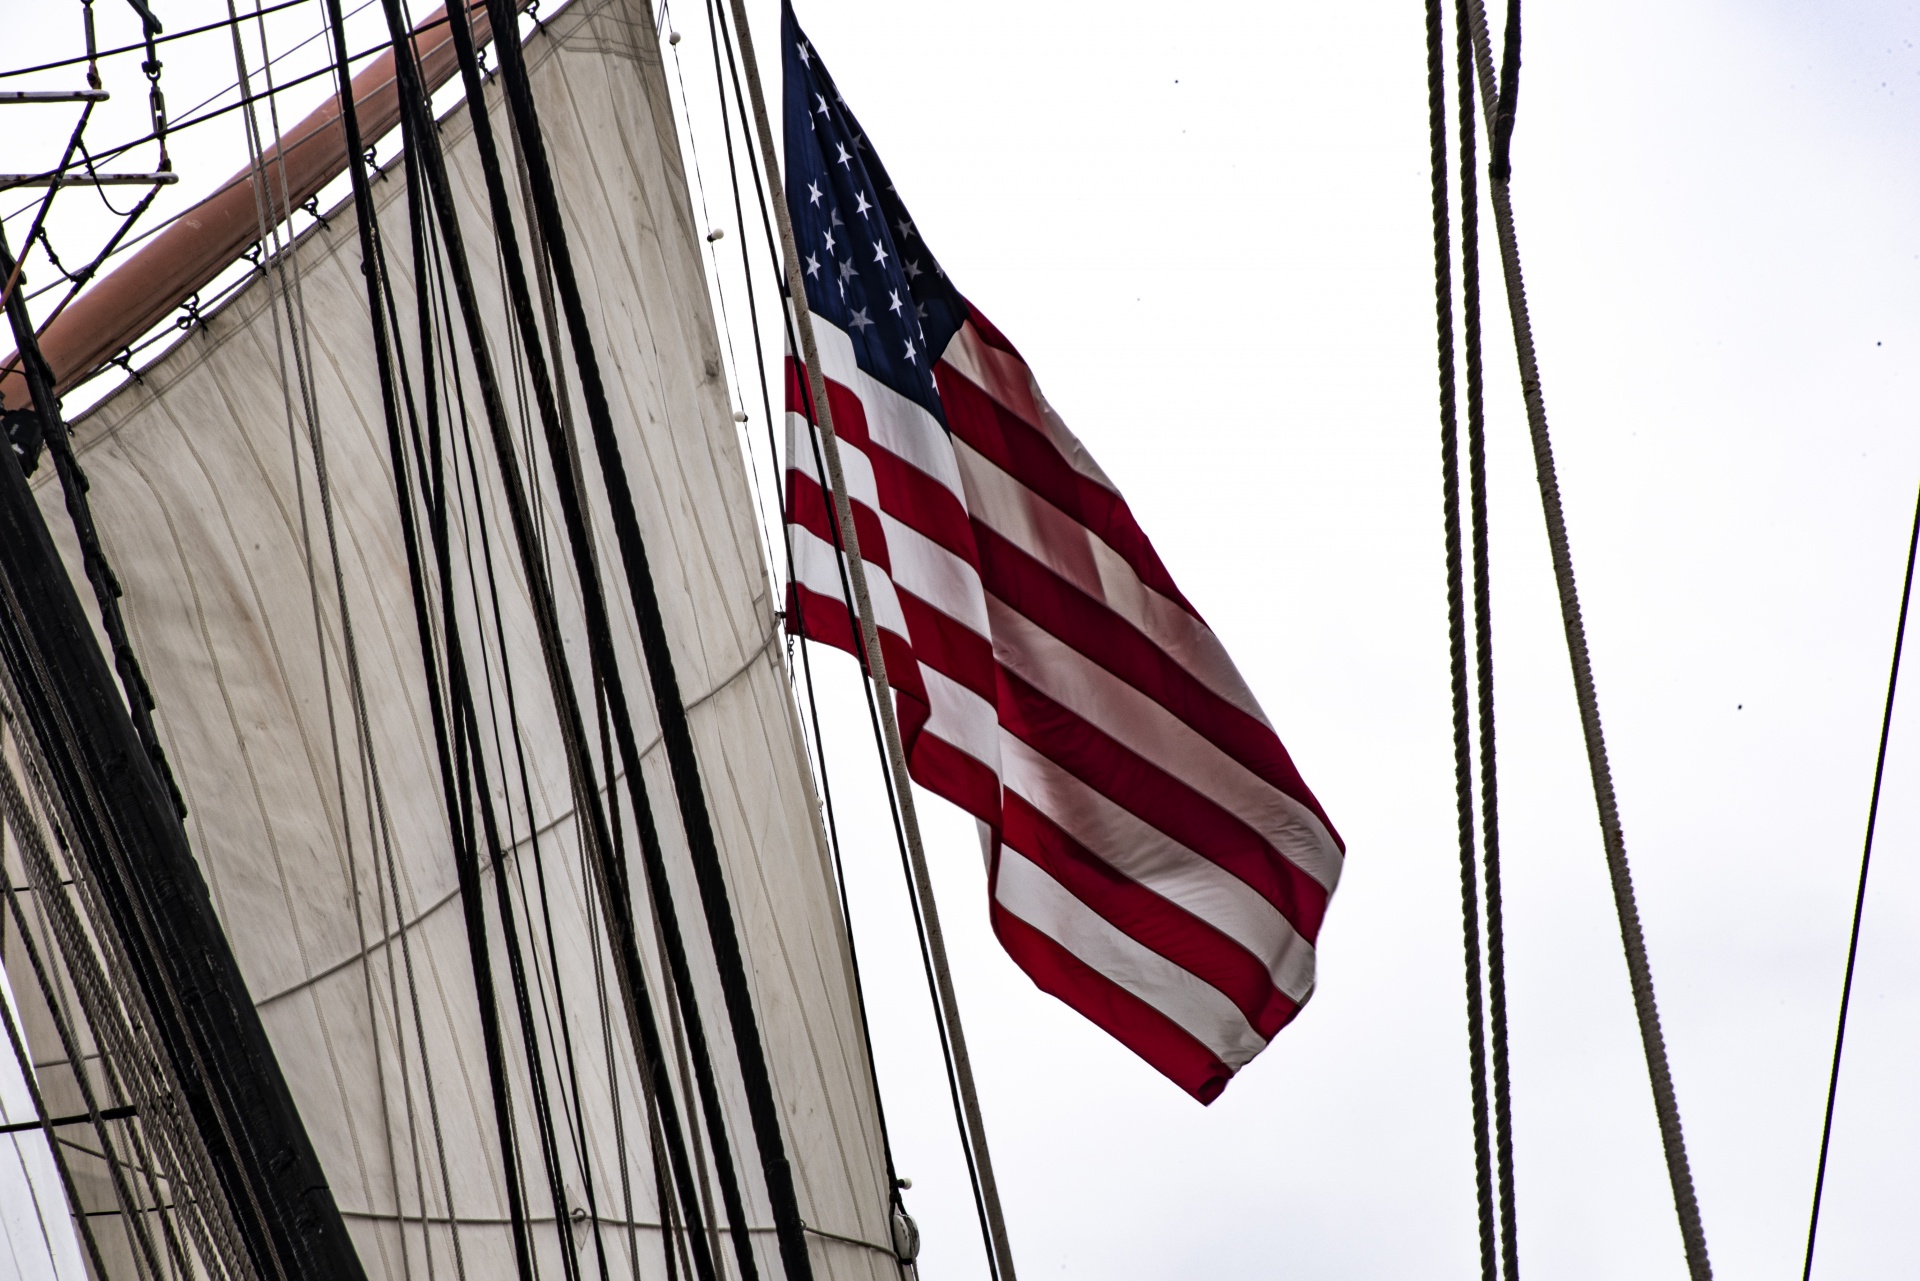 Bandeira americana no mastro do navio